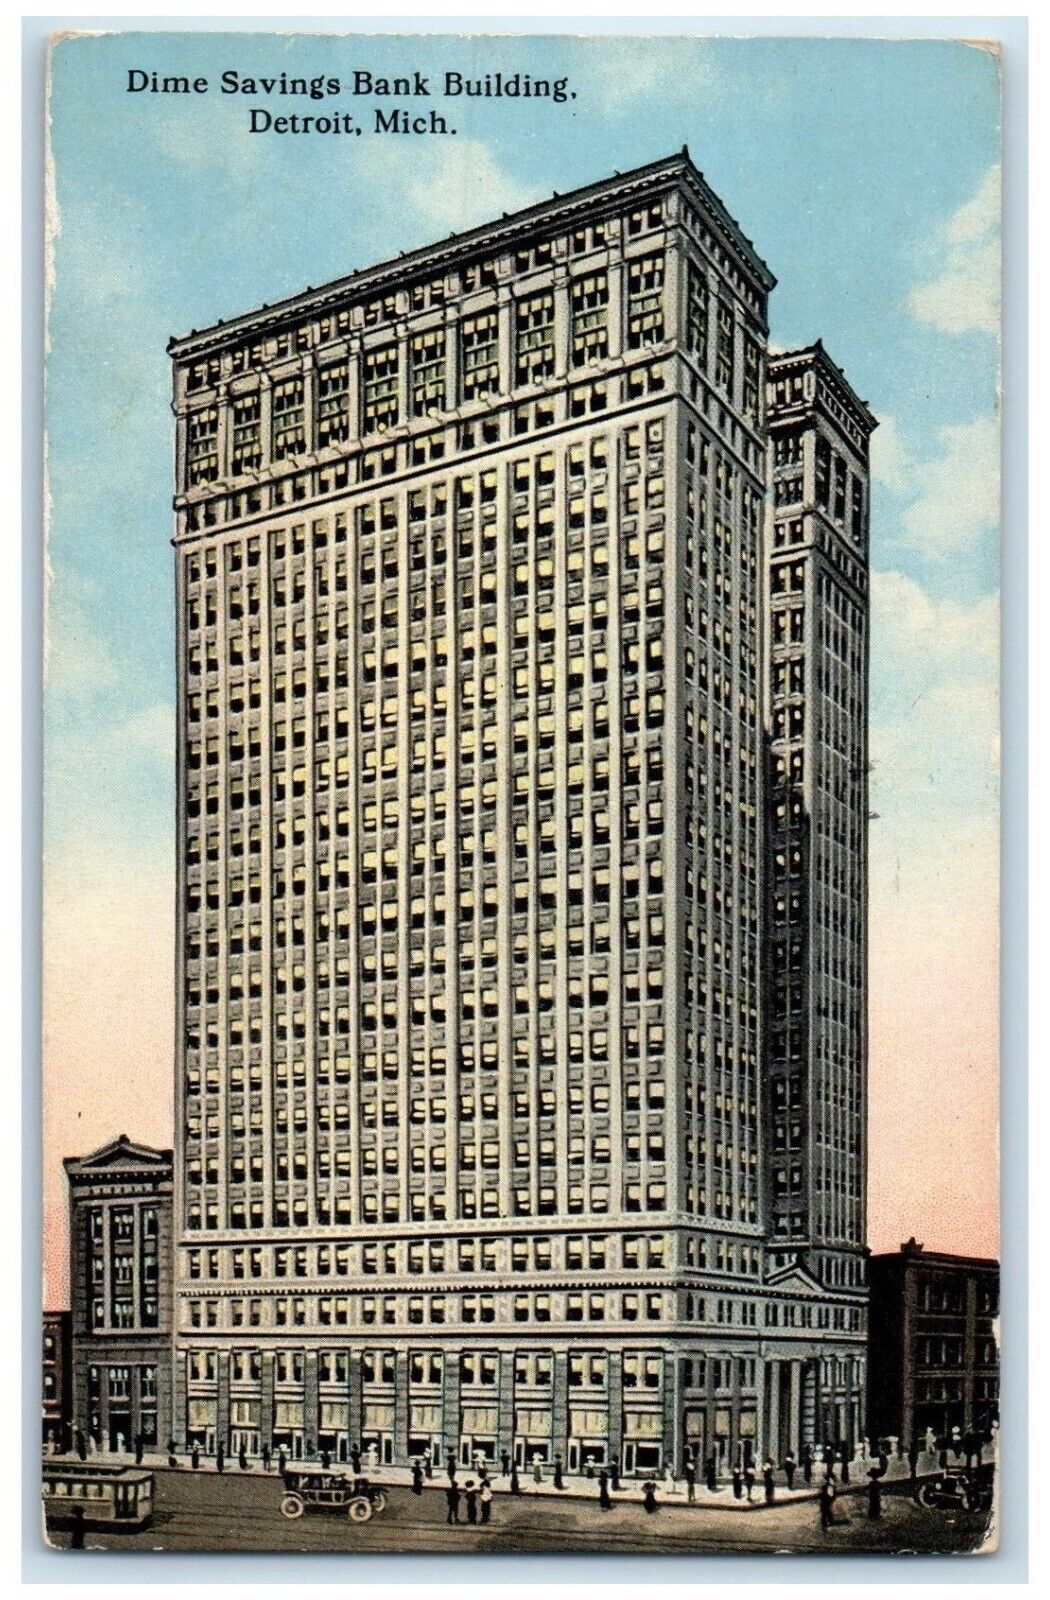 1914 Dime Savings Bank Building Exterior View Detroit Michigan Vintage Postcard